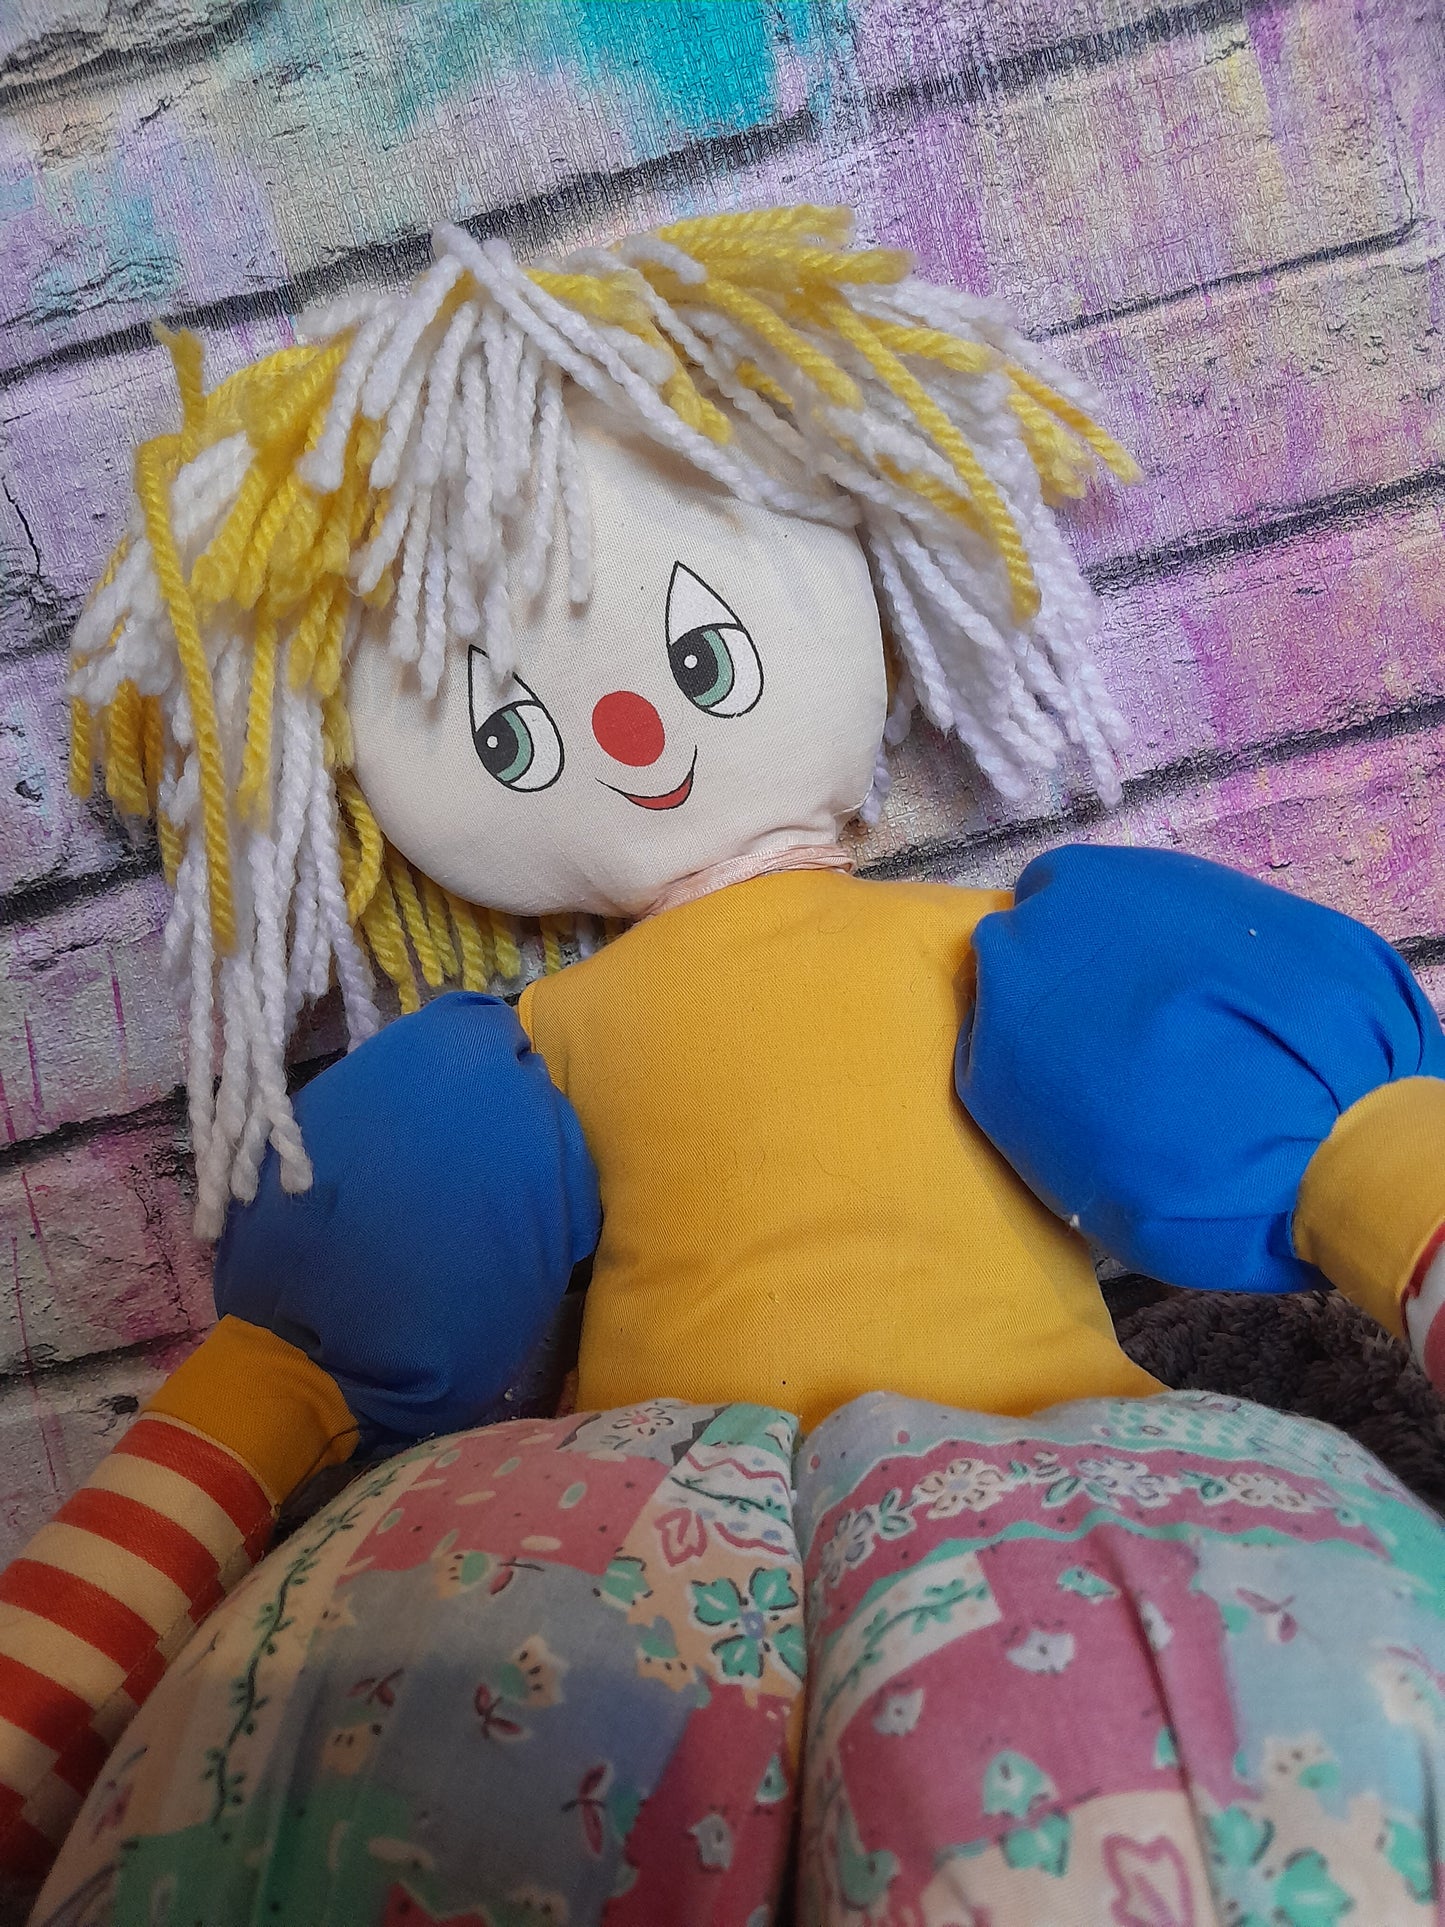 Vintage clown doll